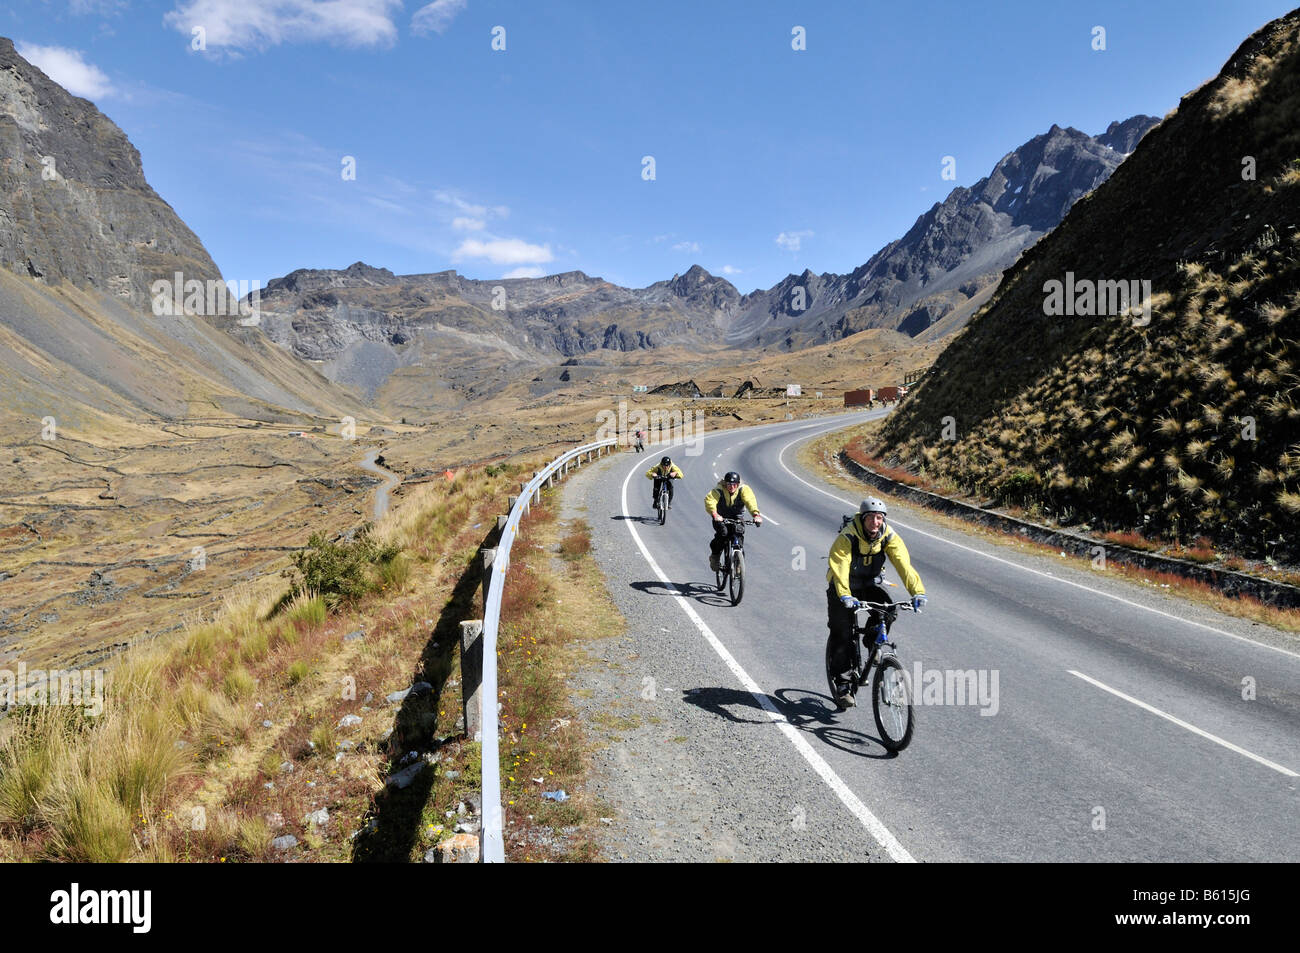 Mountainbikers descending a street, Downhill Biking, Deathroad, Altiplano, La Paz, Bolivia, South America Stock Photo